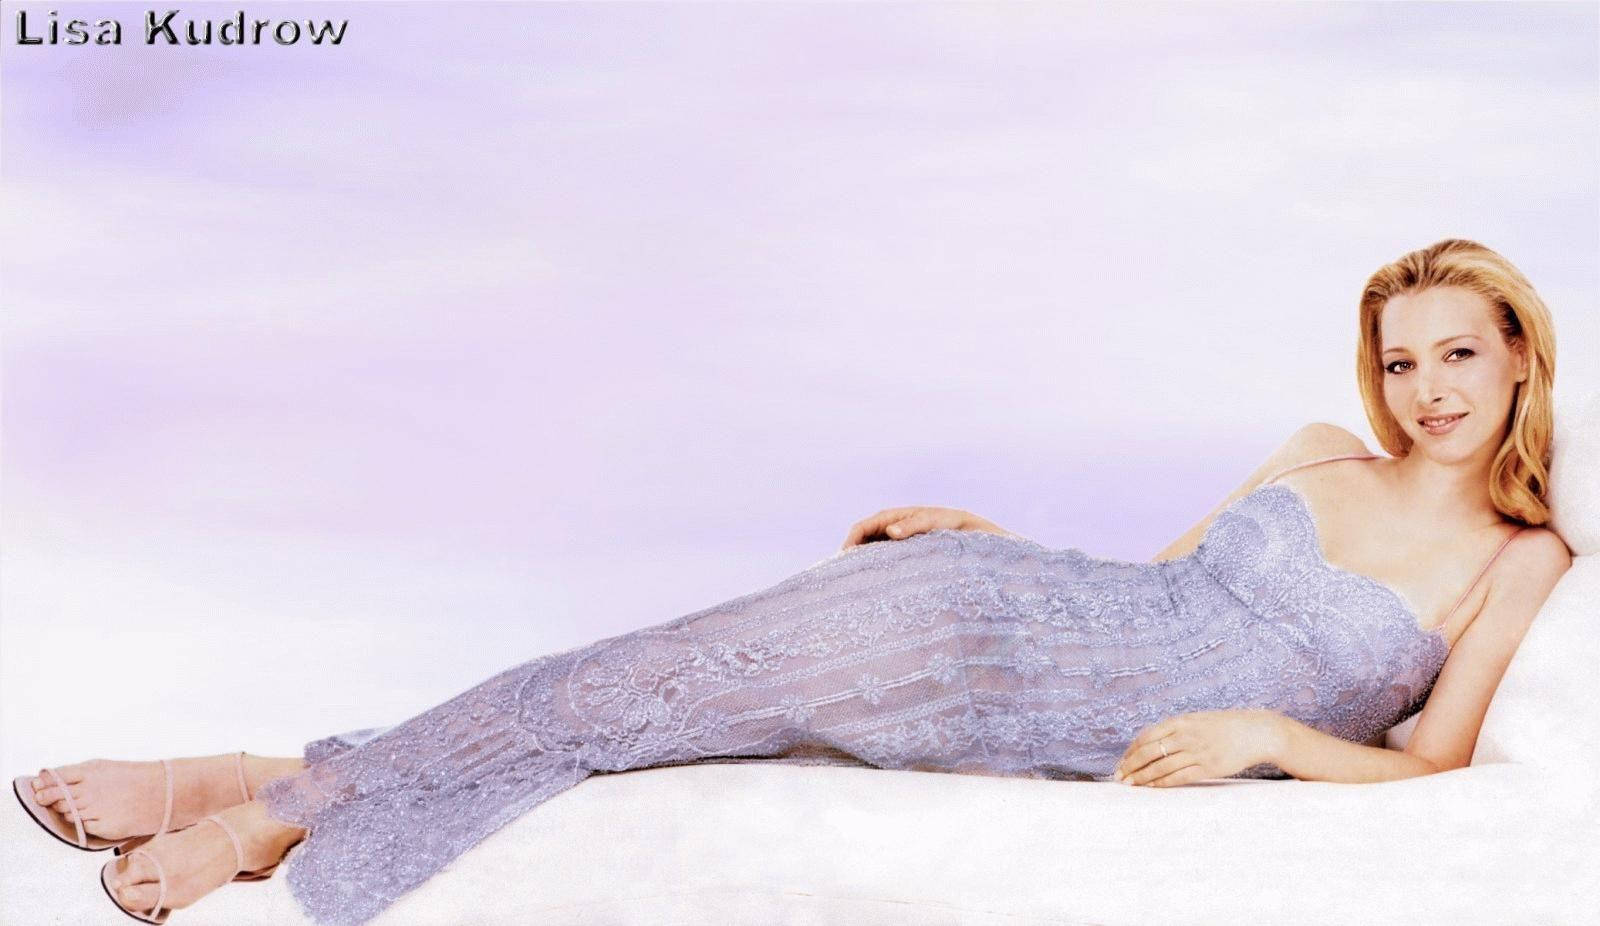 Lisa Kudrow Gorgeous Lavender Gown Wallpaper